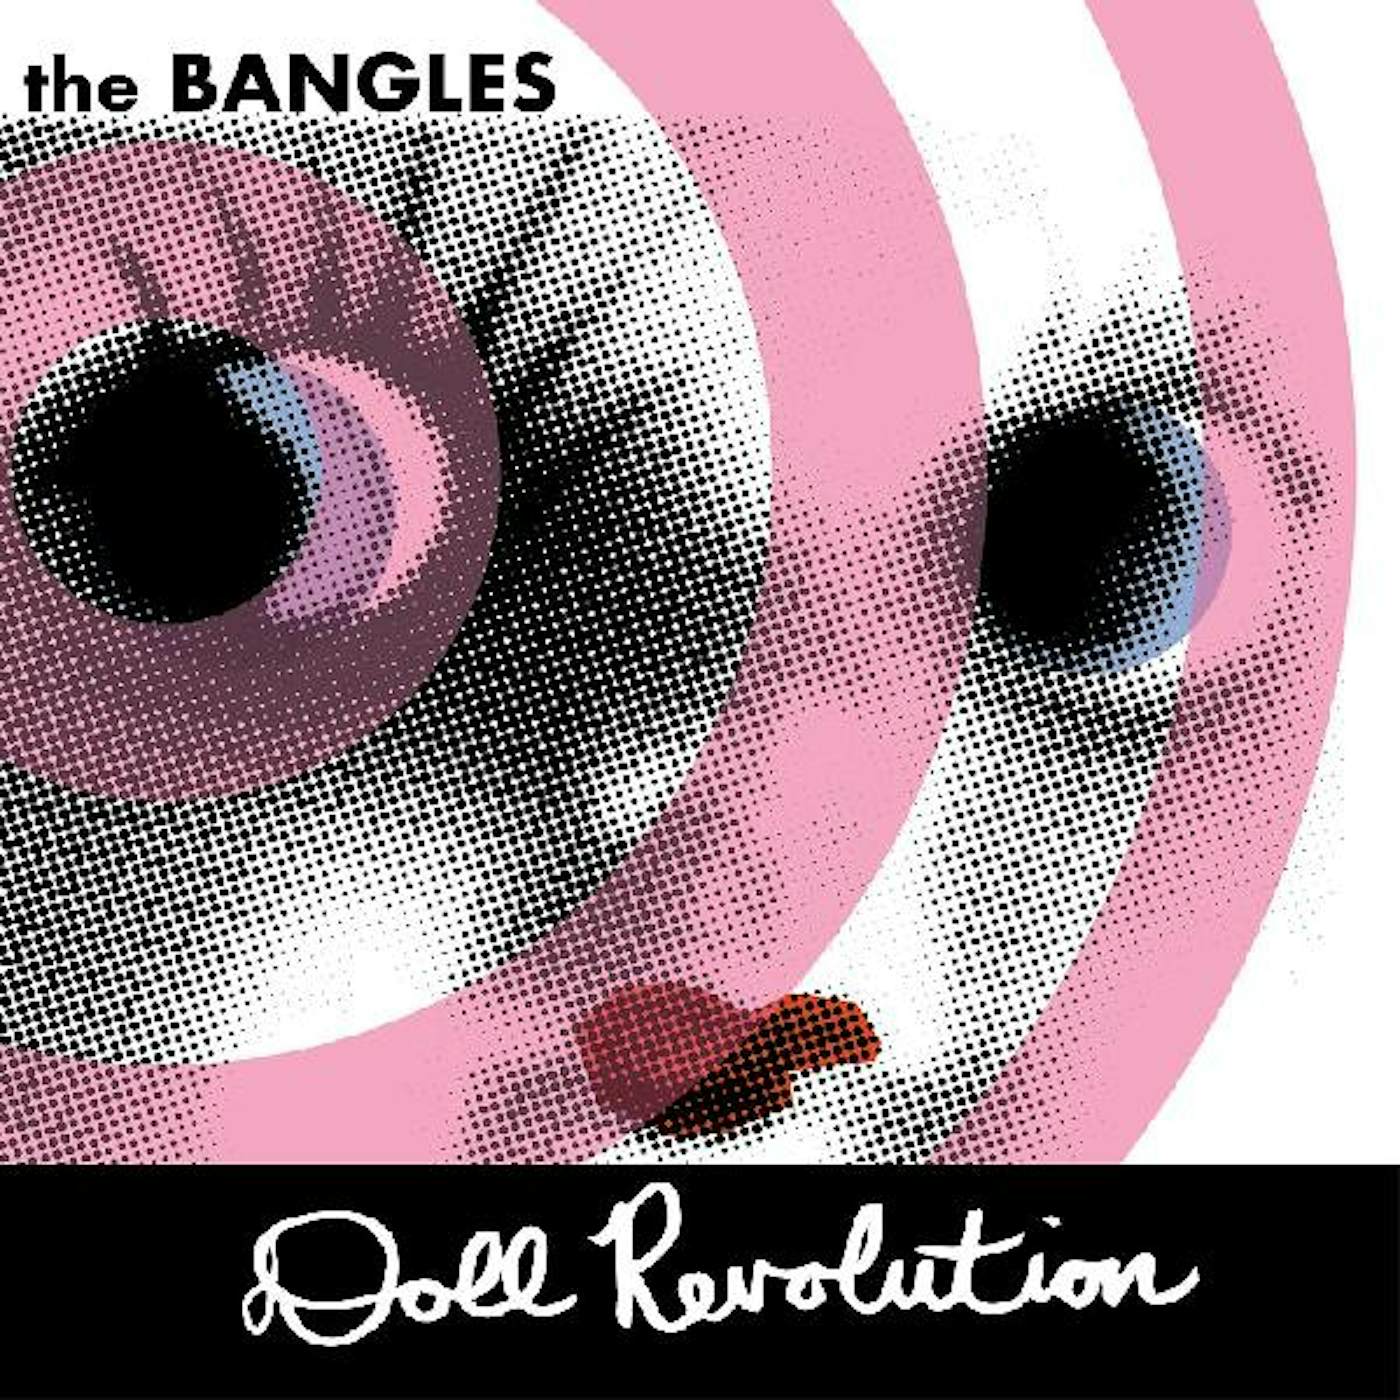 The Bangles DOLL REVOLUTION (LIMITED/2LP/WHITE VINYL EDITION) Vinyl Record